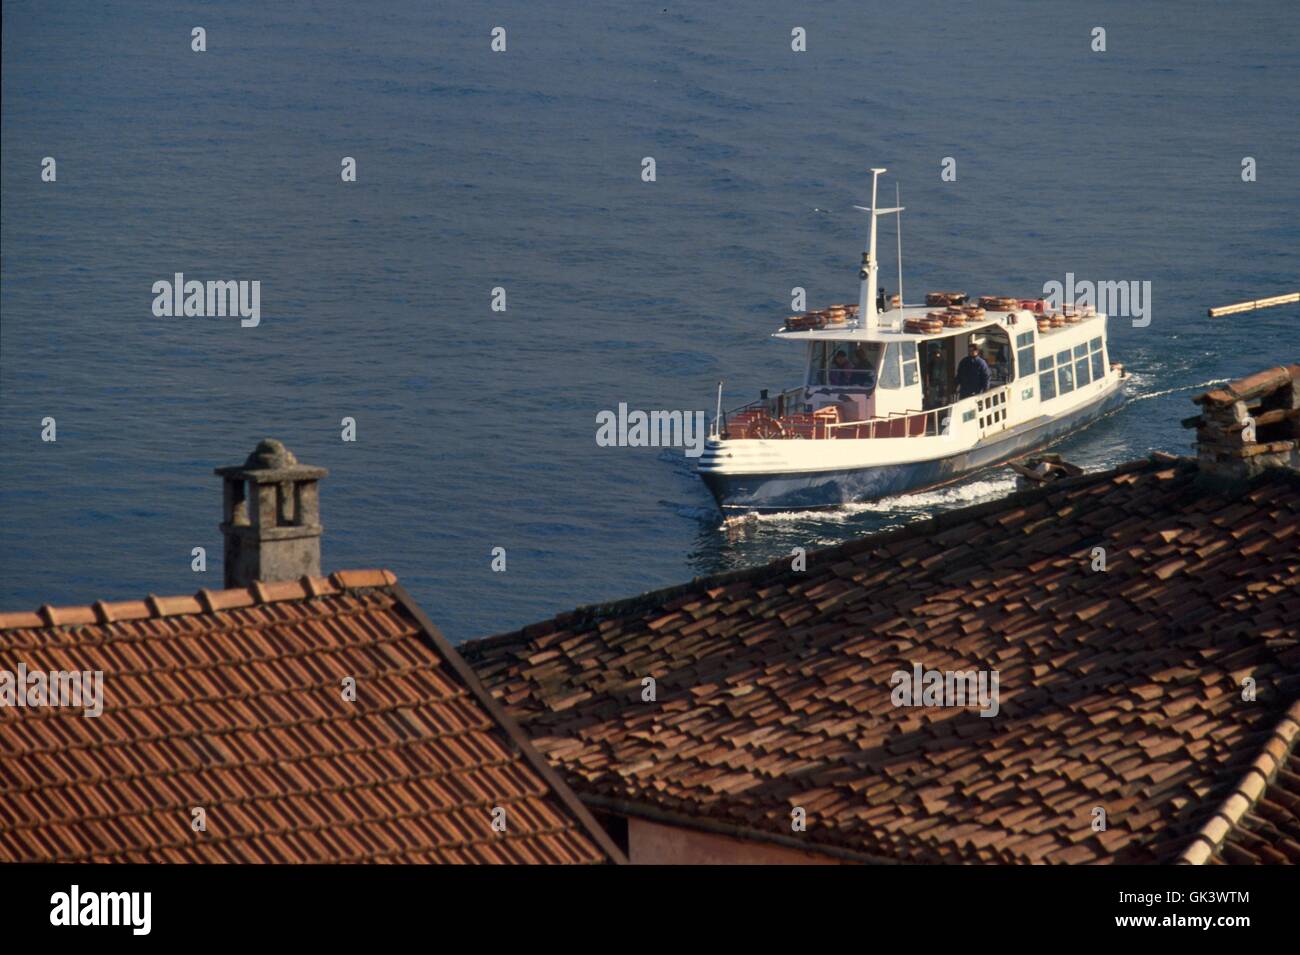 Italy, Lombardy region, Iseo lake, the roofs of Carzano village on Montisola island Stock Photo